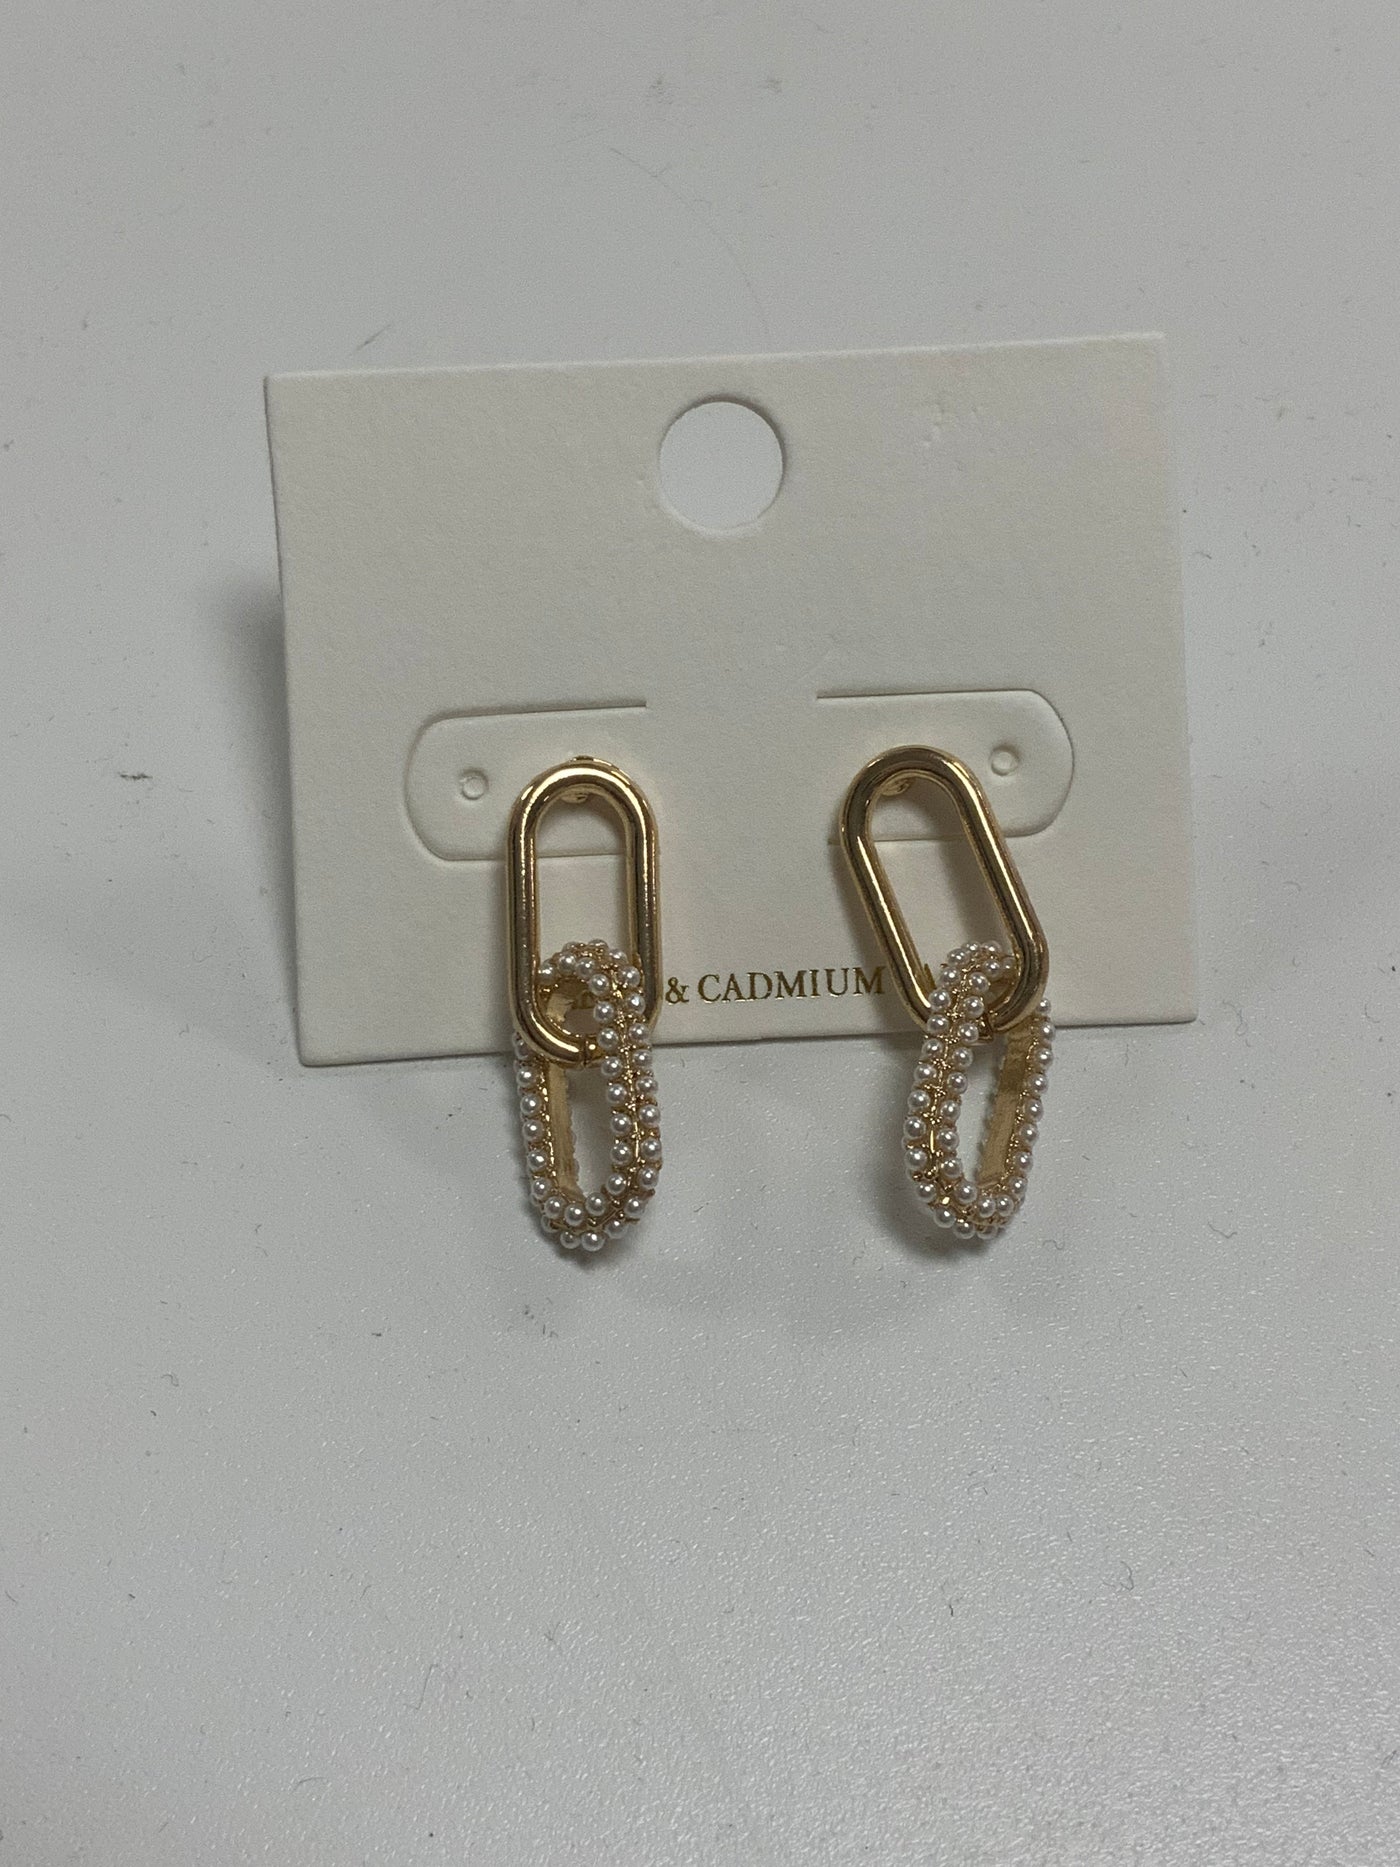 Gold Pearl Chain Earrings